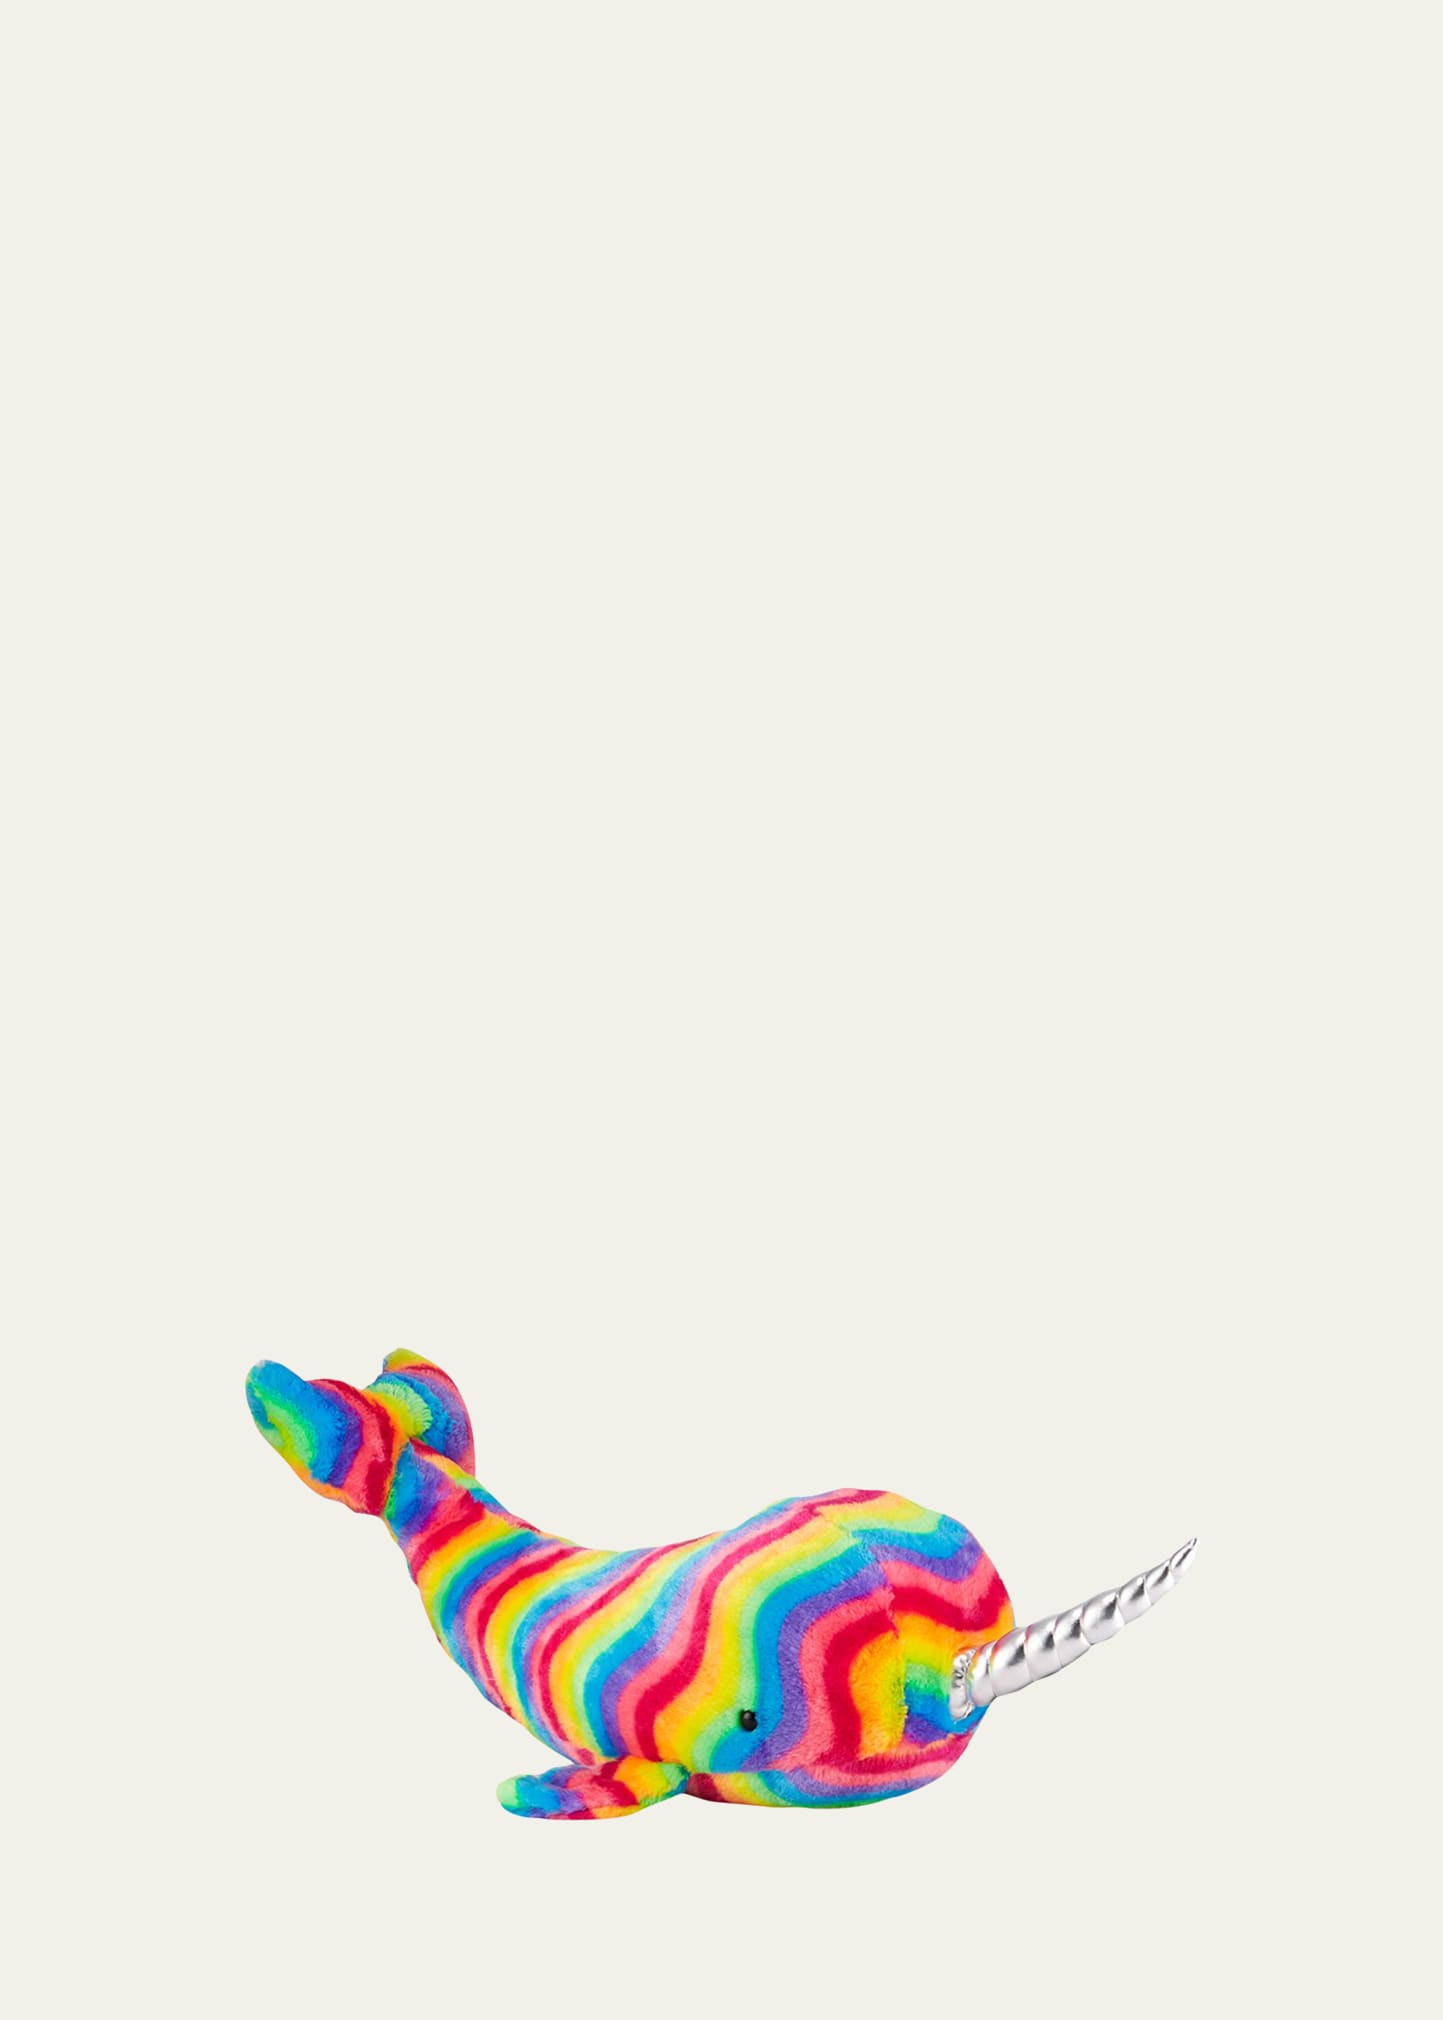 Douglas Large Rainbow Narwhal Plush Stuffed Animal Toy